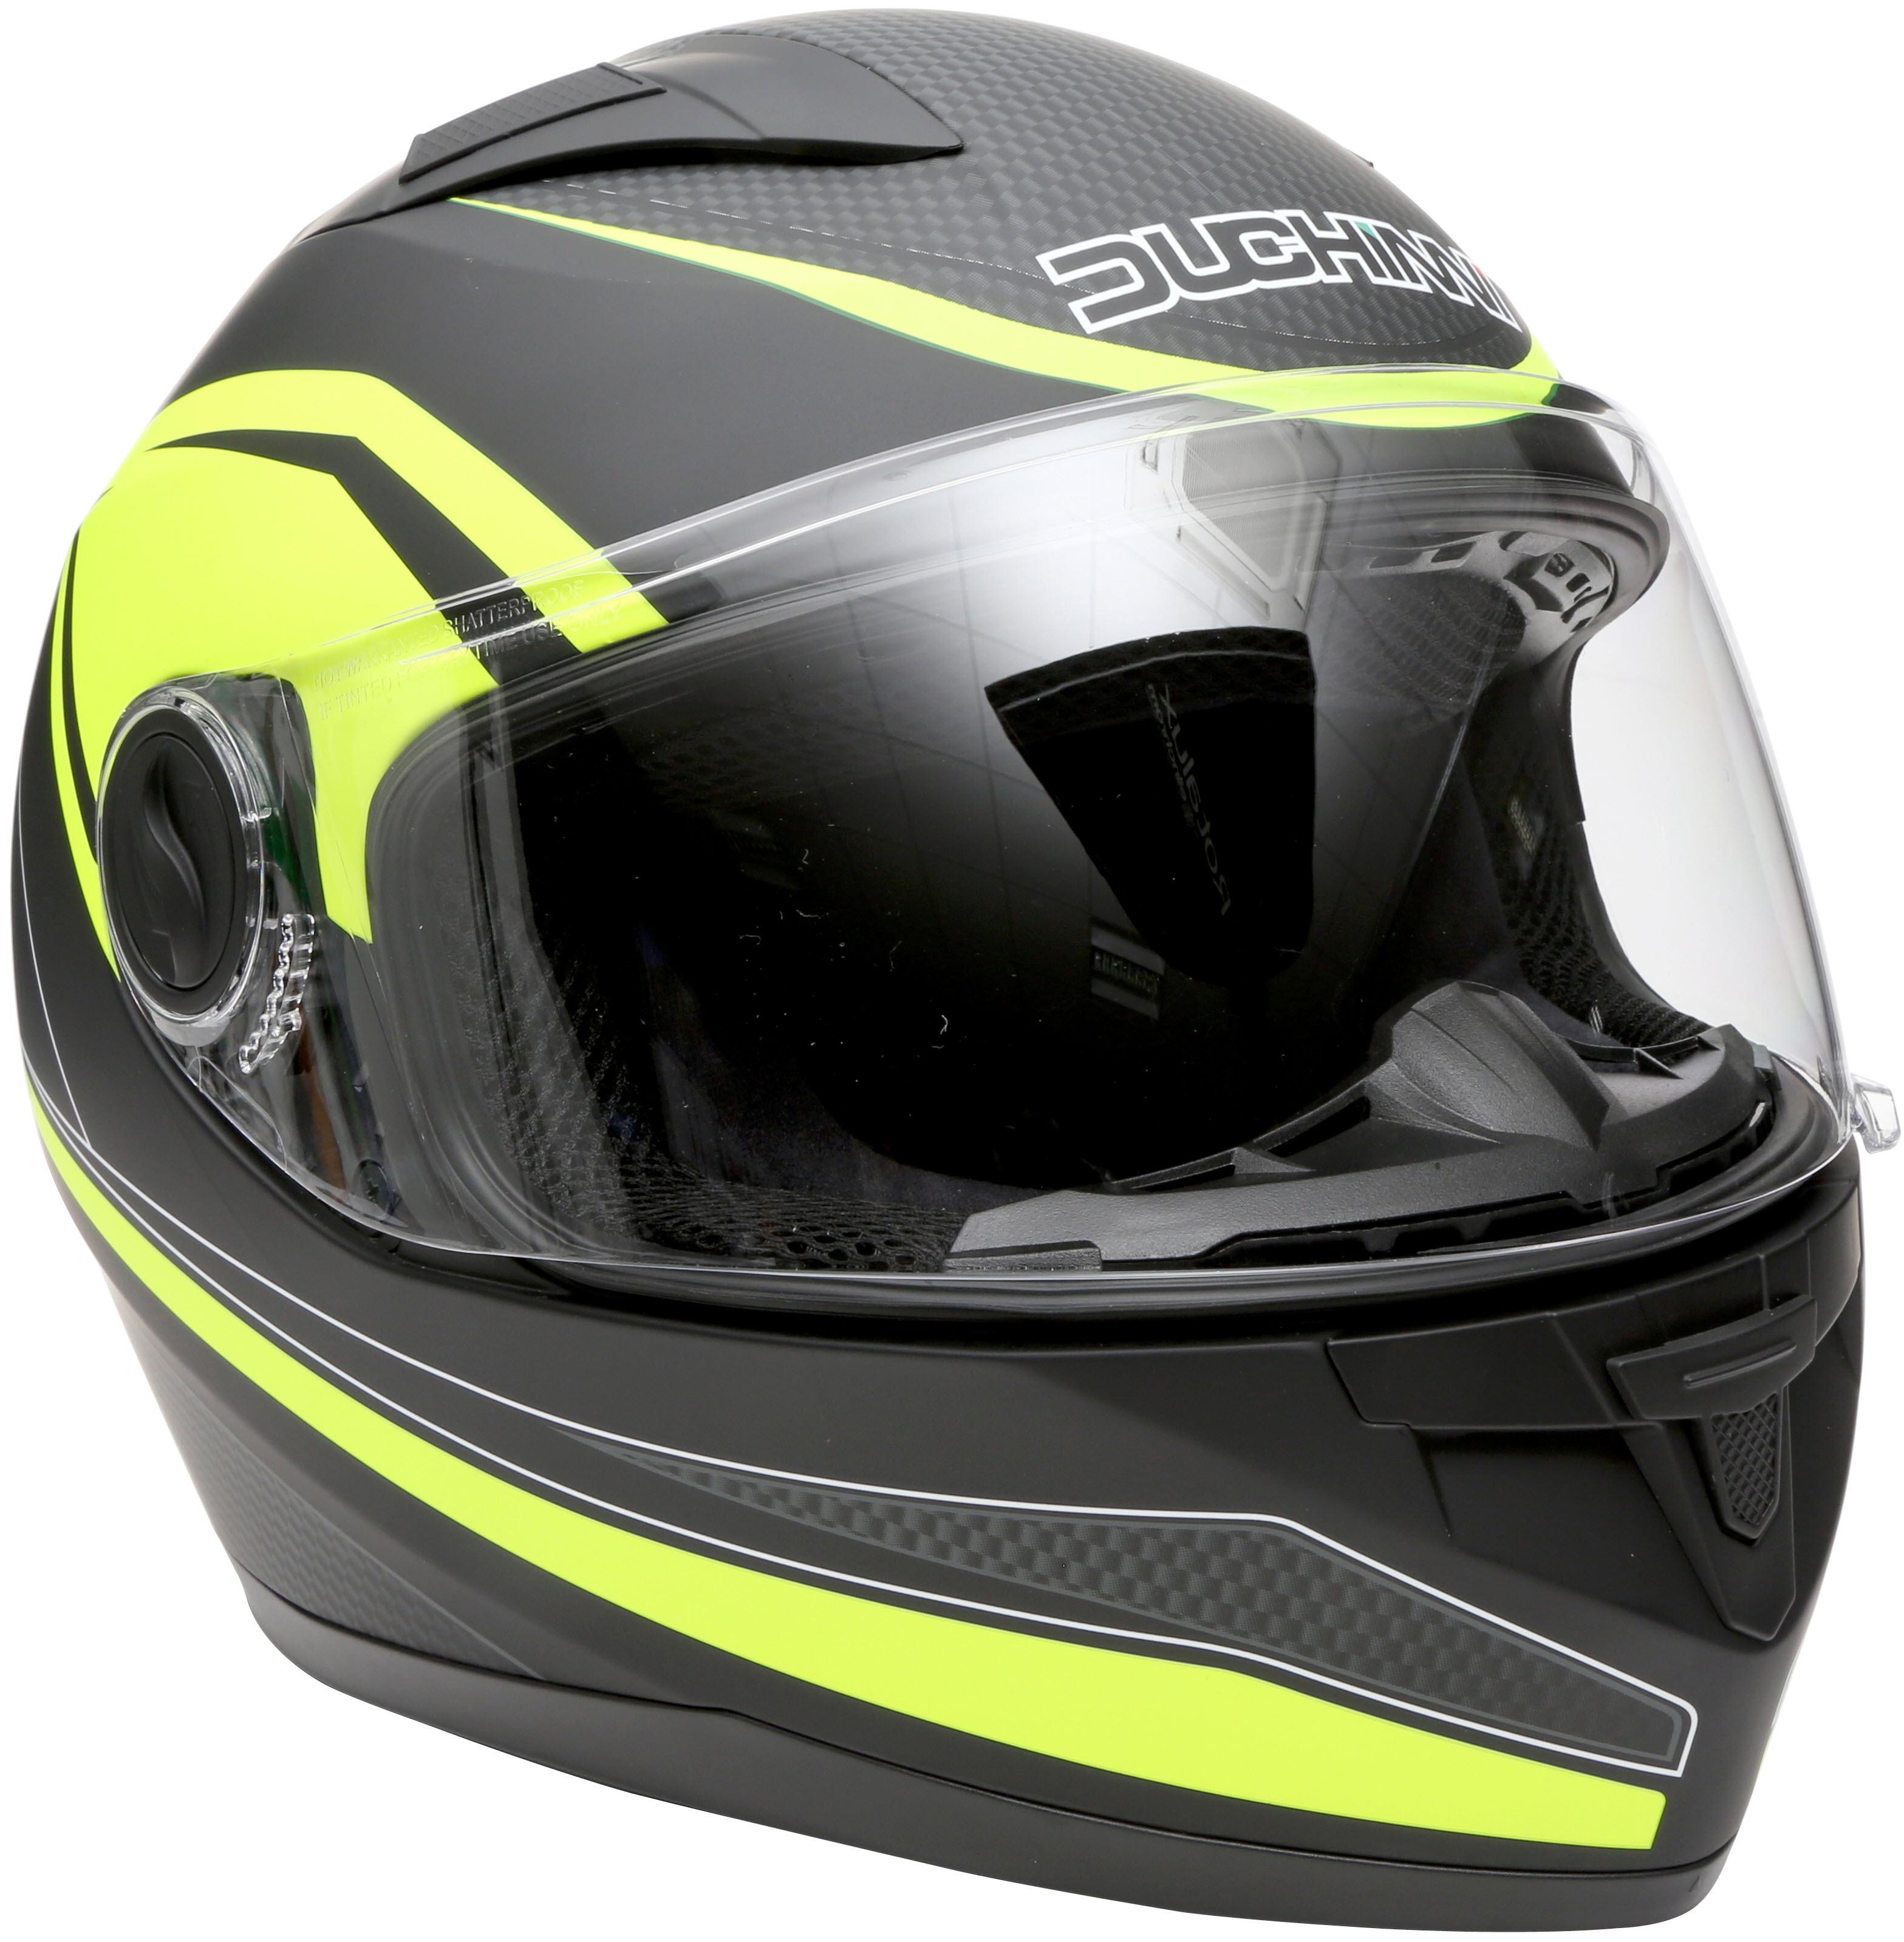 Duchinni Helmet D705 - Black/Neon, Medium